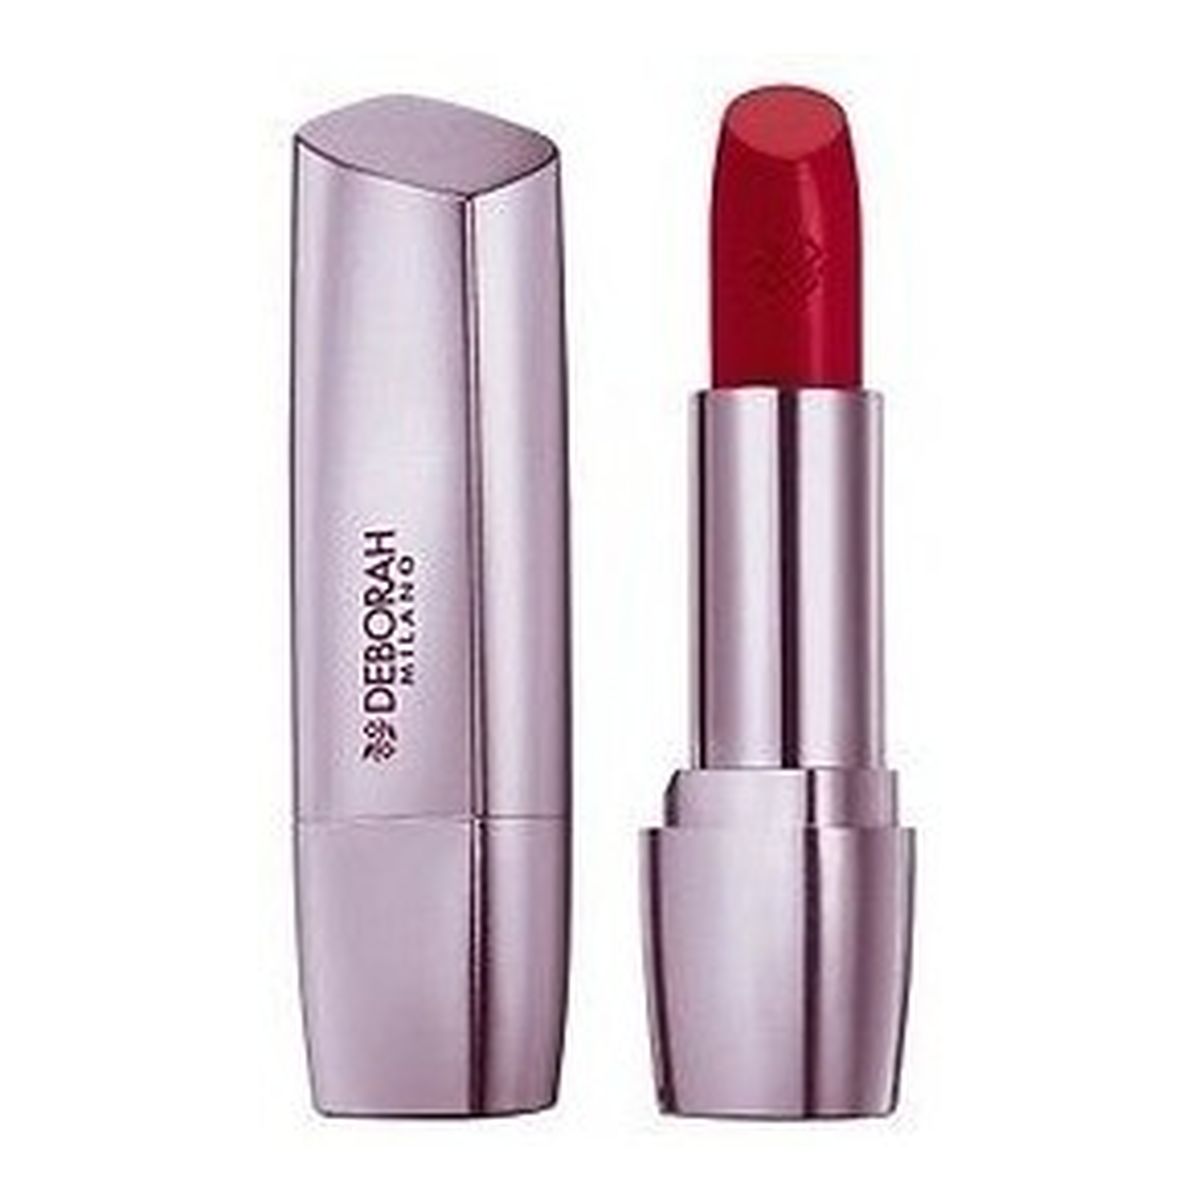 Deborah Milano Red Shine Lipstick Pomadka do ust SPF15 28g